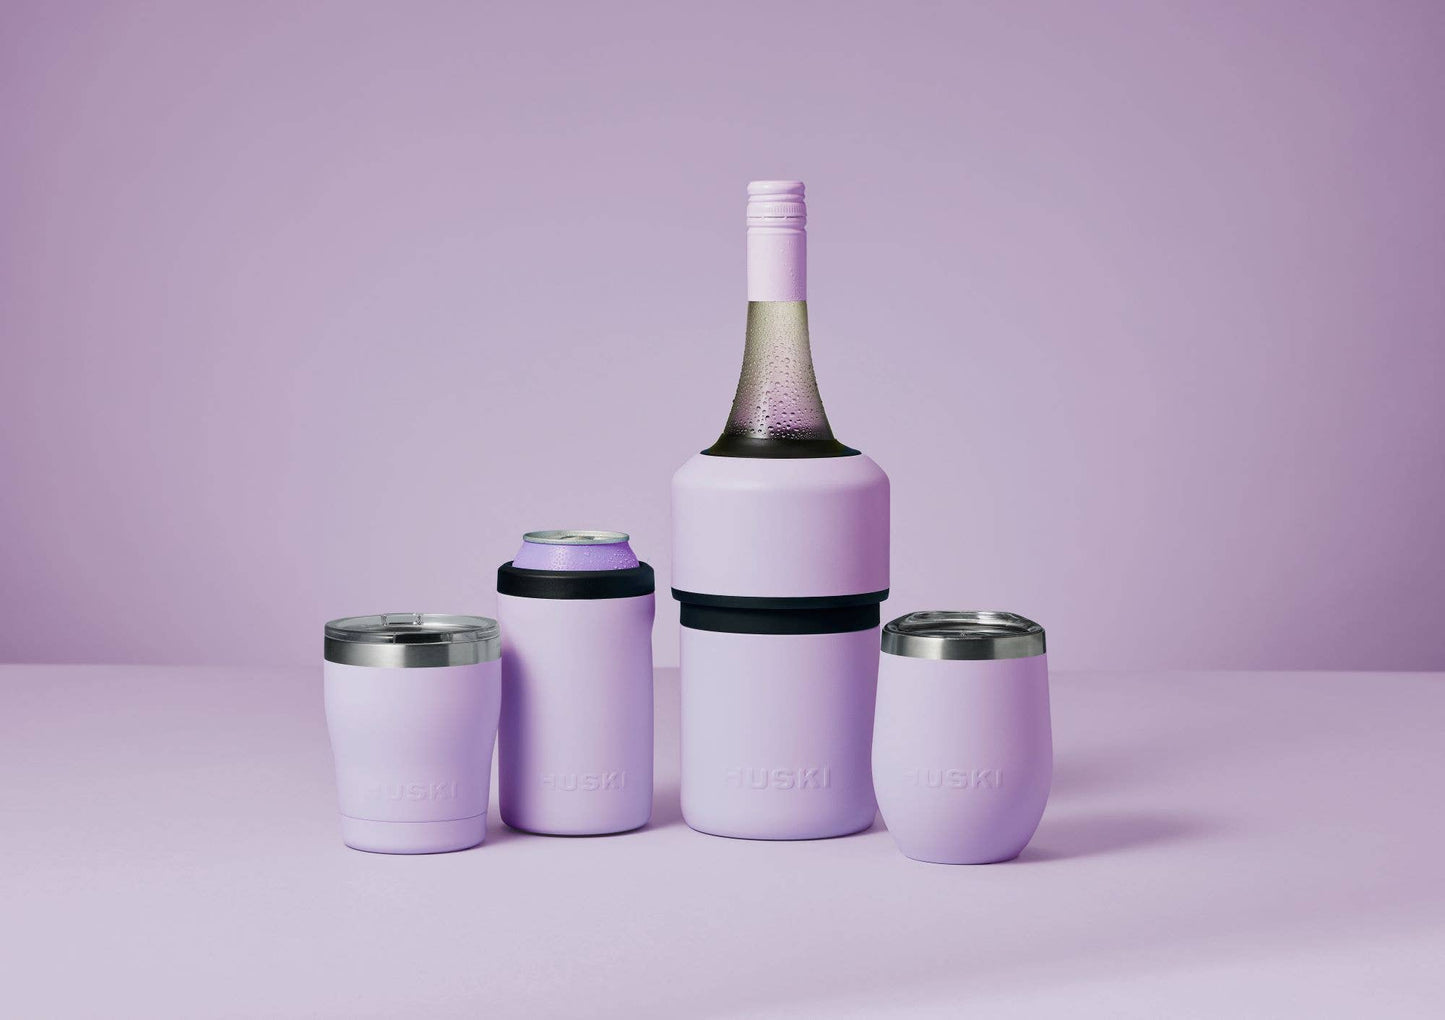 Huski Wine Cooler - Lilac (Limited Release)